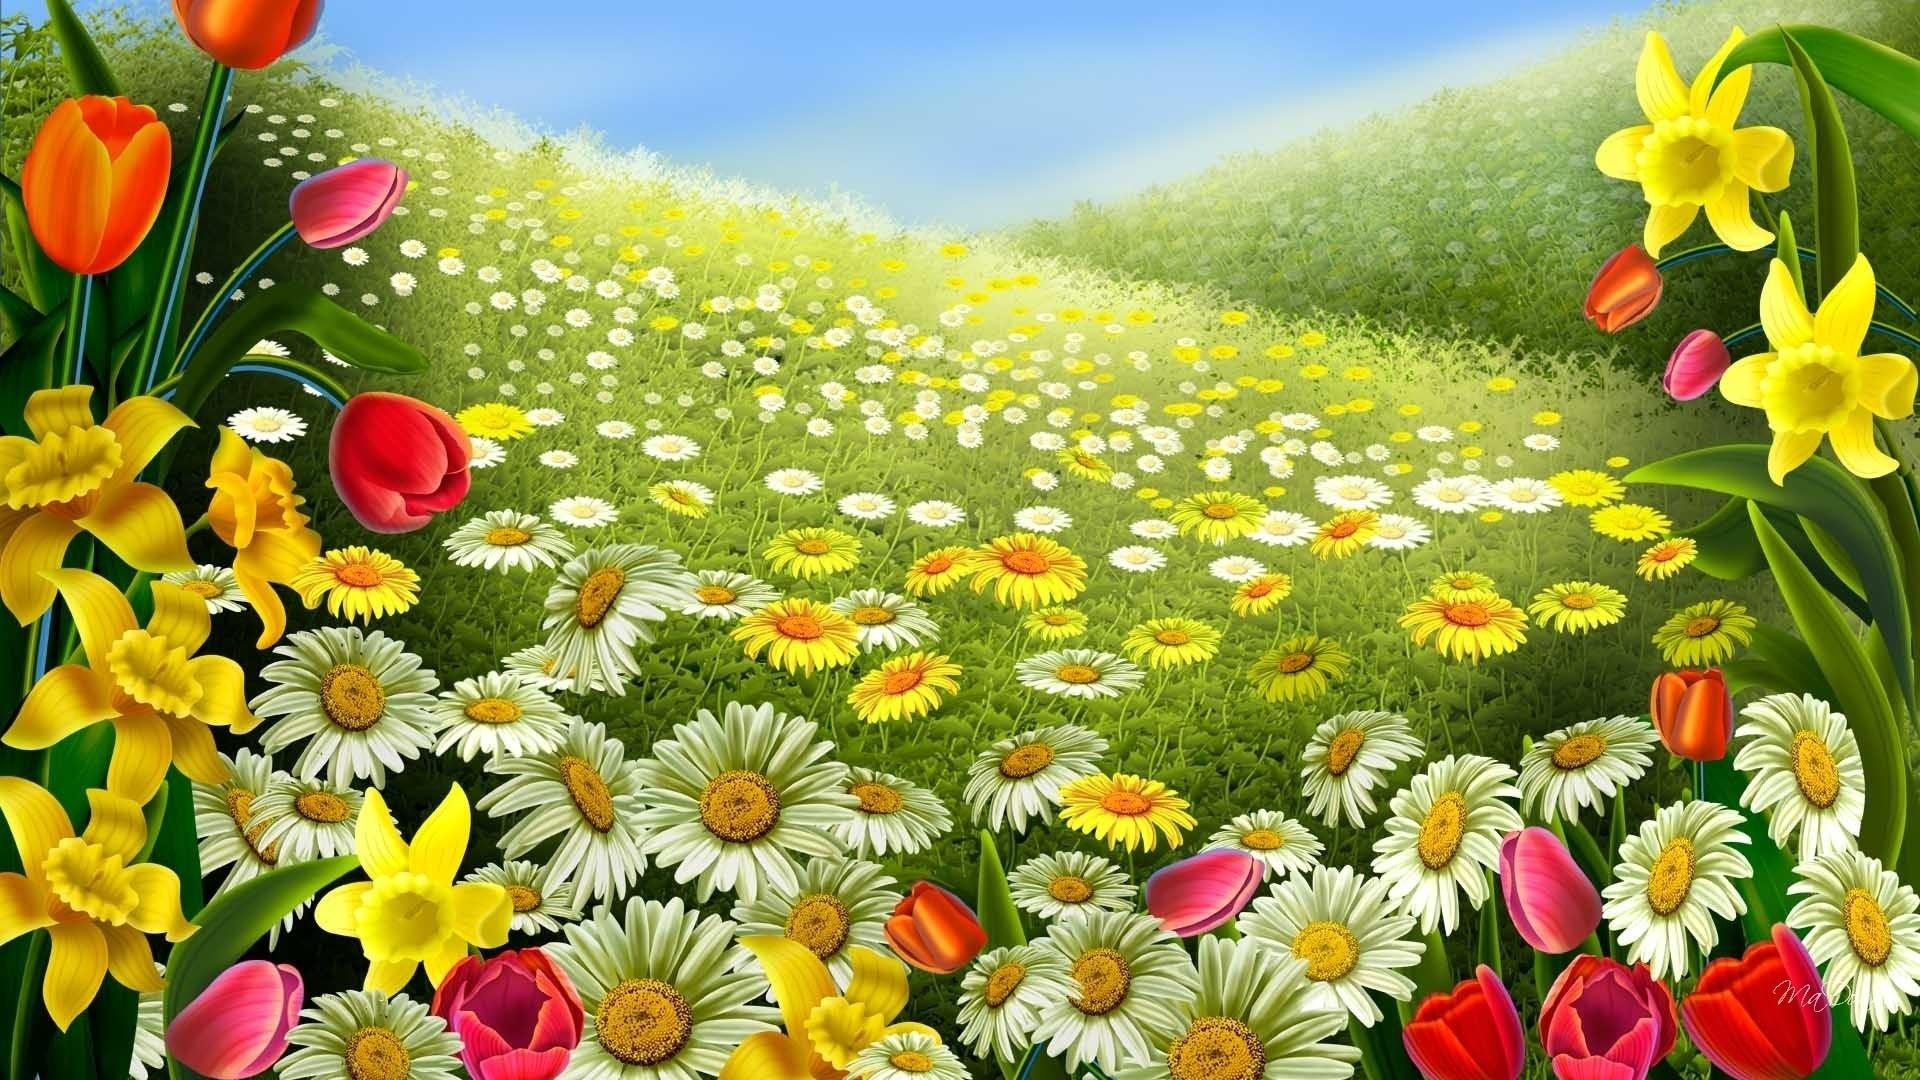 Картинки луг, весна, природа, картинка, поле, цветы, ромашки, тюльпаны,  фотошоп, тема - обои 1920x1080, картинка №89440